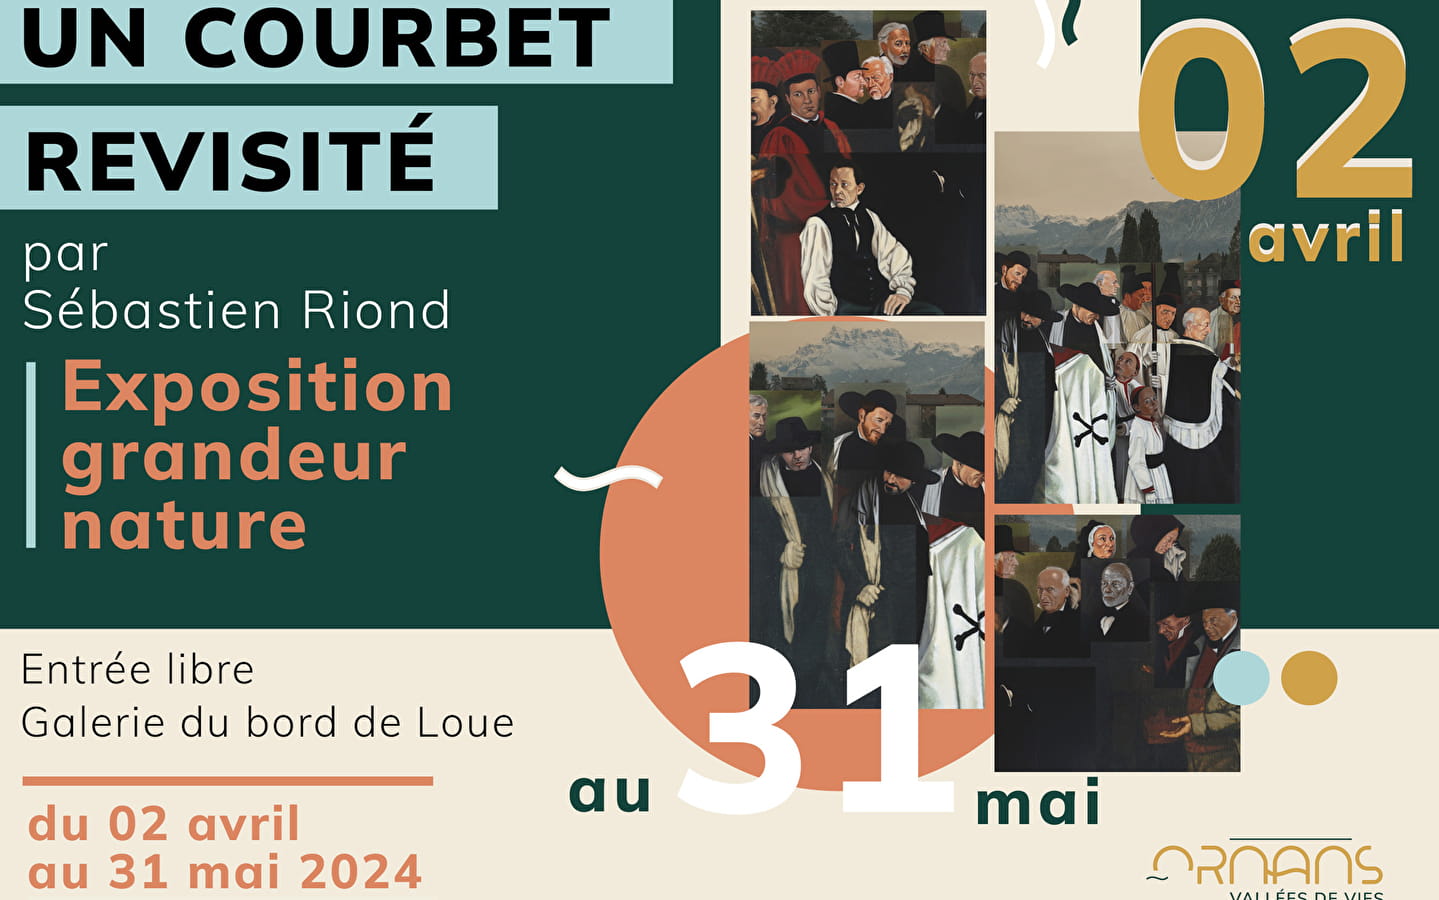 Ausstellung 'Un Courbet revisité' von Sébastien Riond